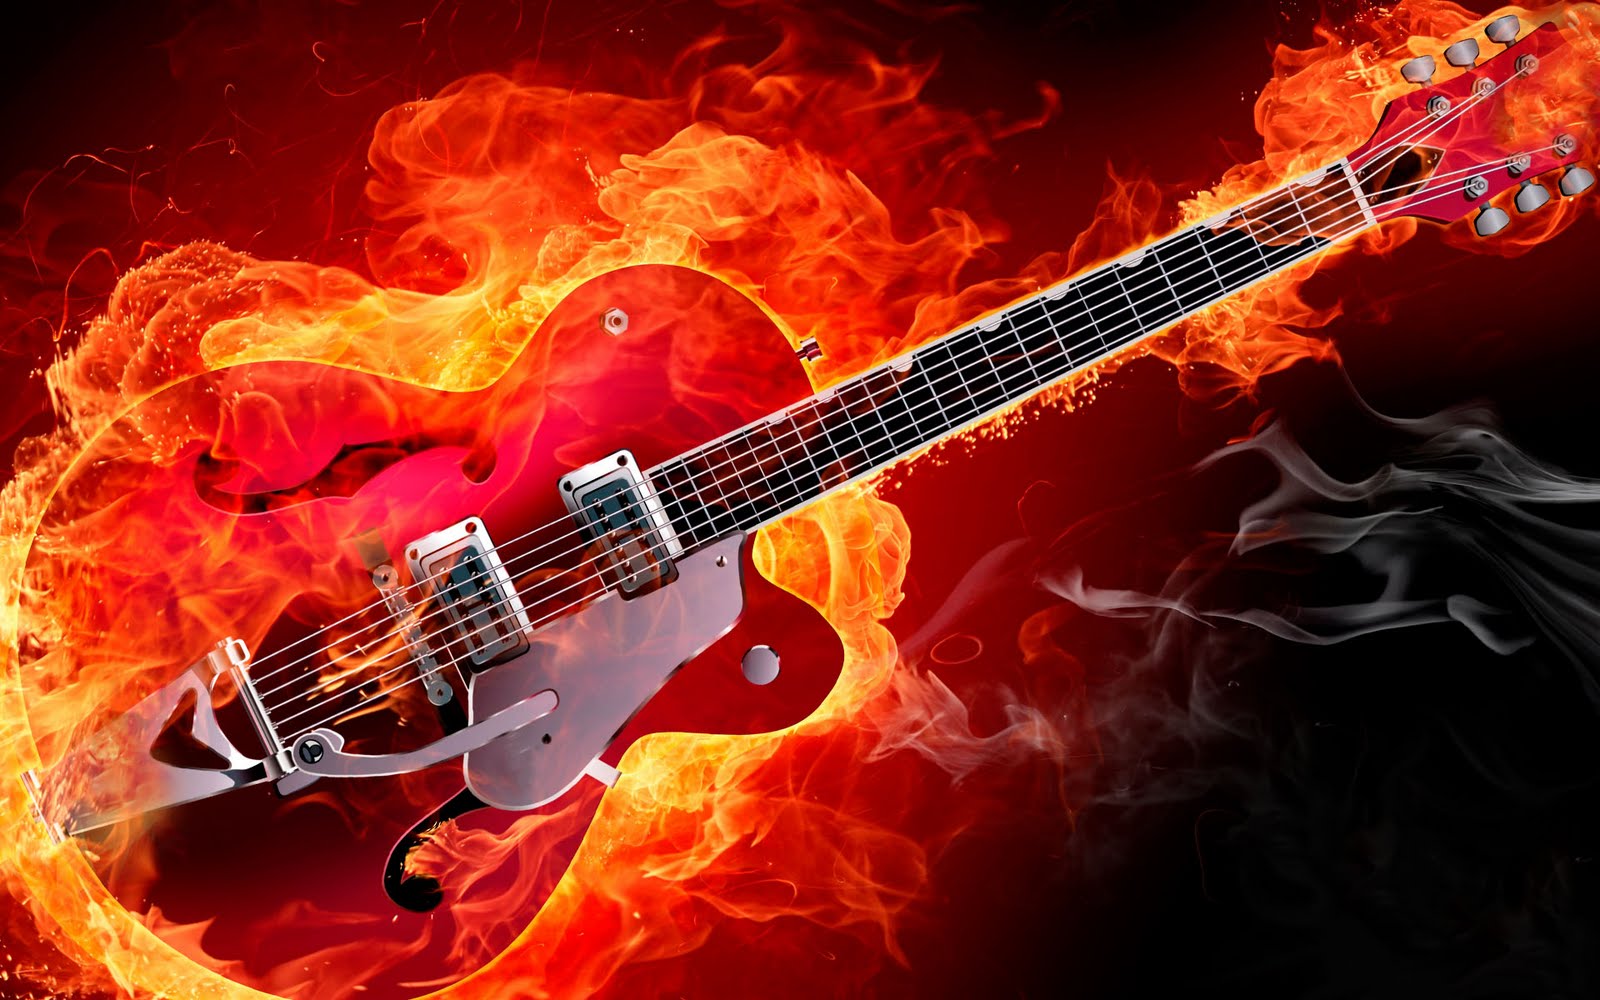 Electric Rockabilly Guitar on Fire